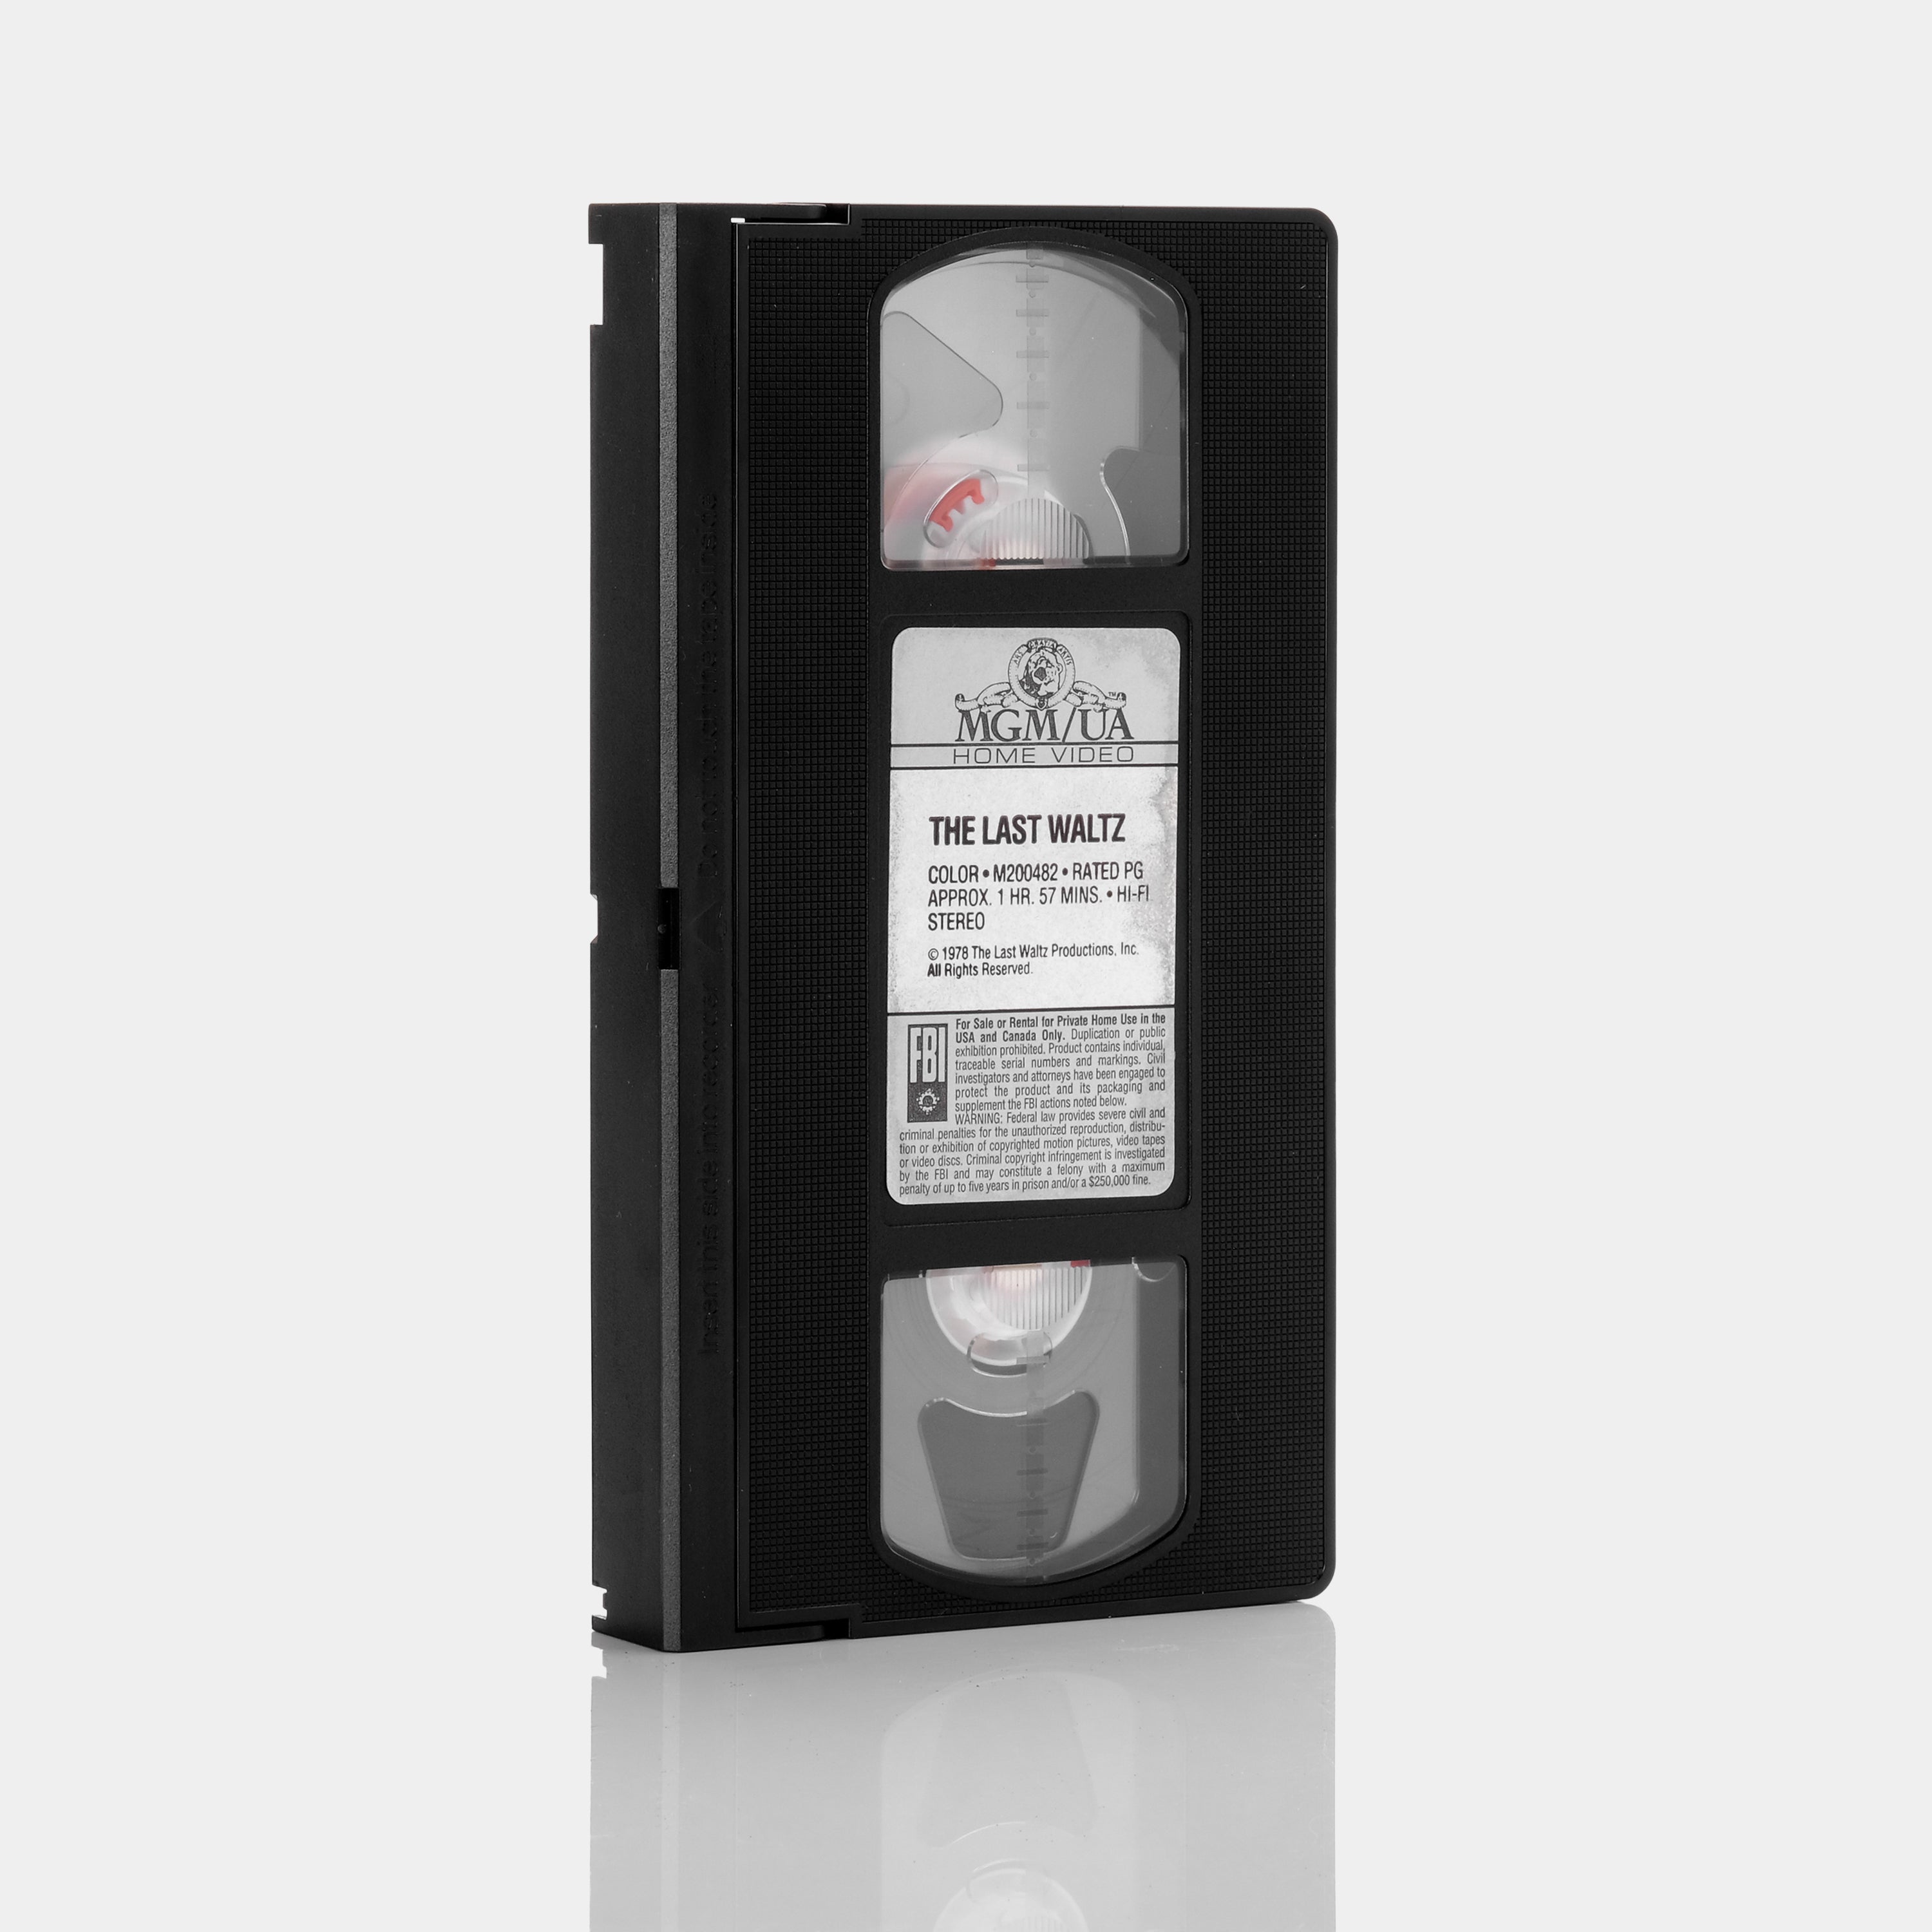 The Last Waltz VHS Tape